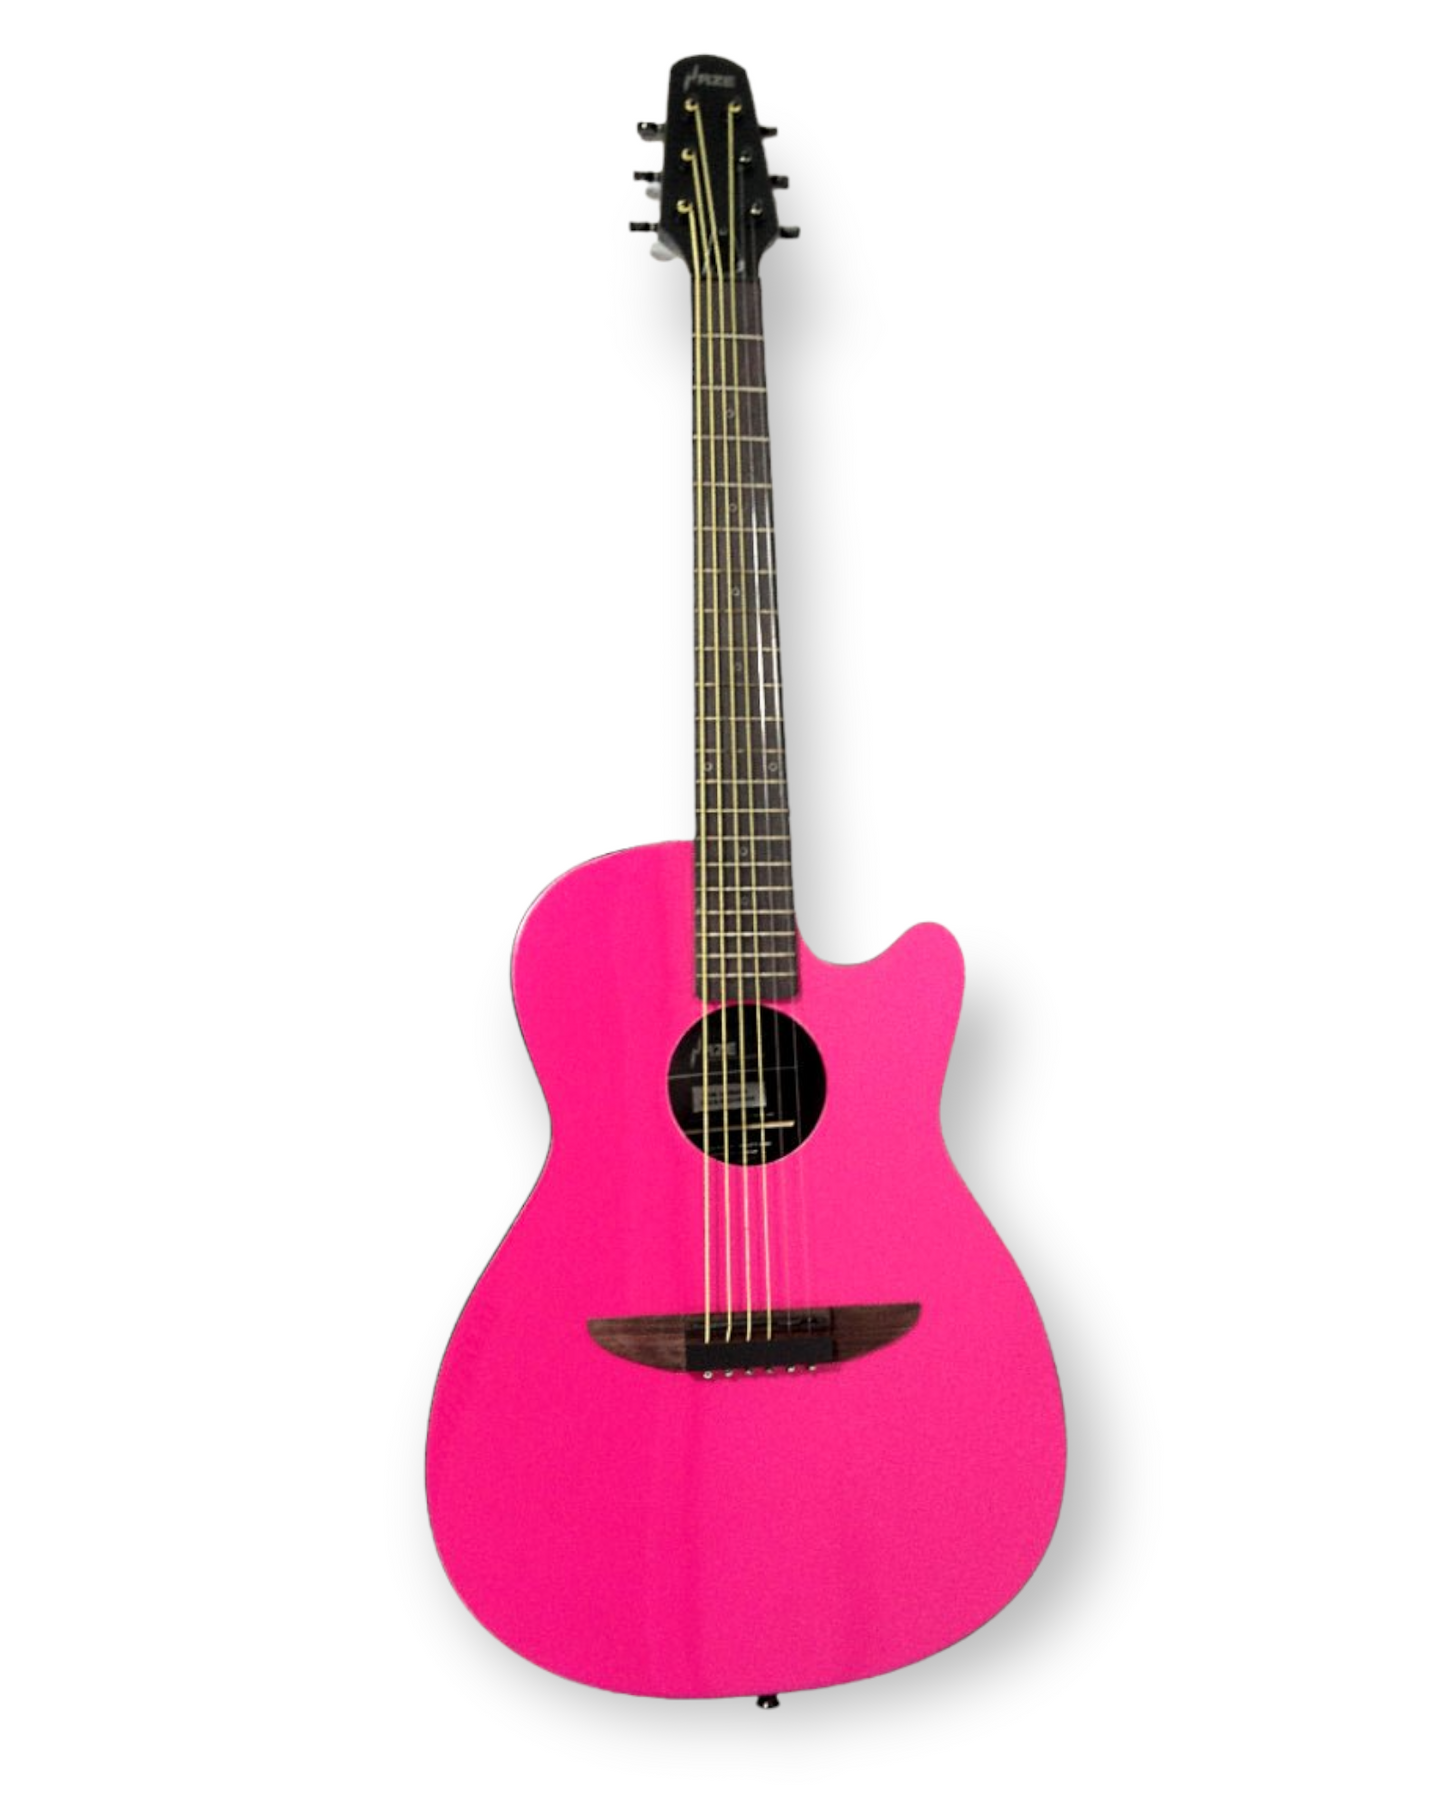 Haze Roundback 38" Traveller Built-In Pickups Acoustic Guitar - Pink HSDP836CPK